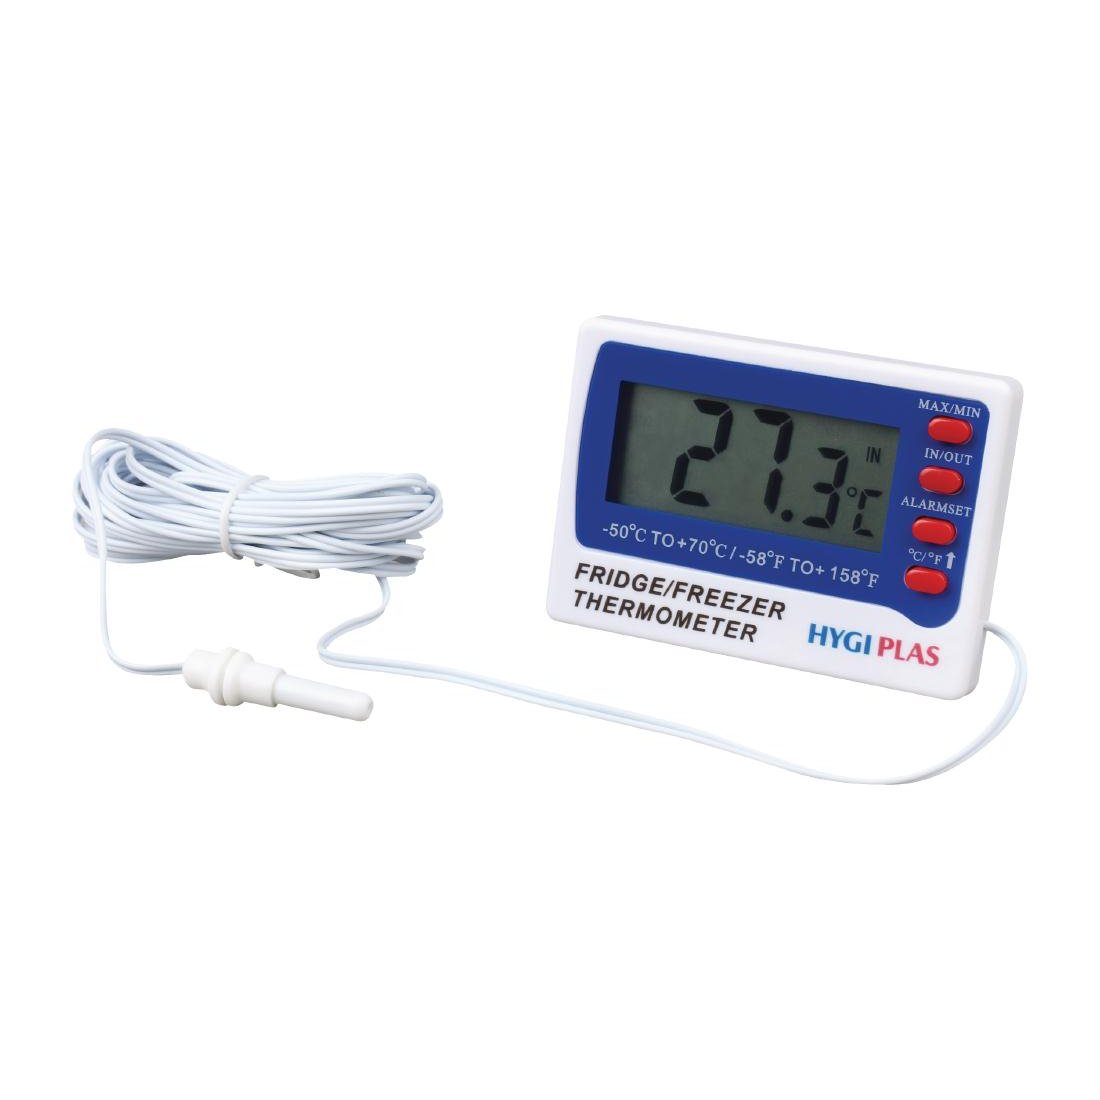 Digital Thermometer for Fridge or Freezer